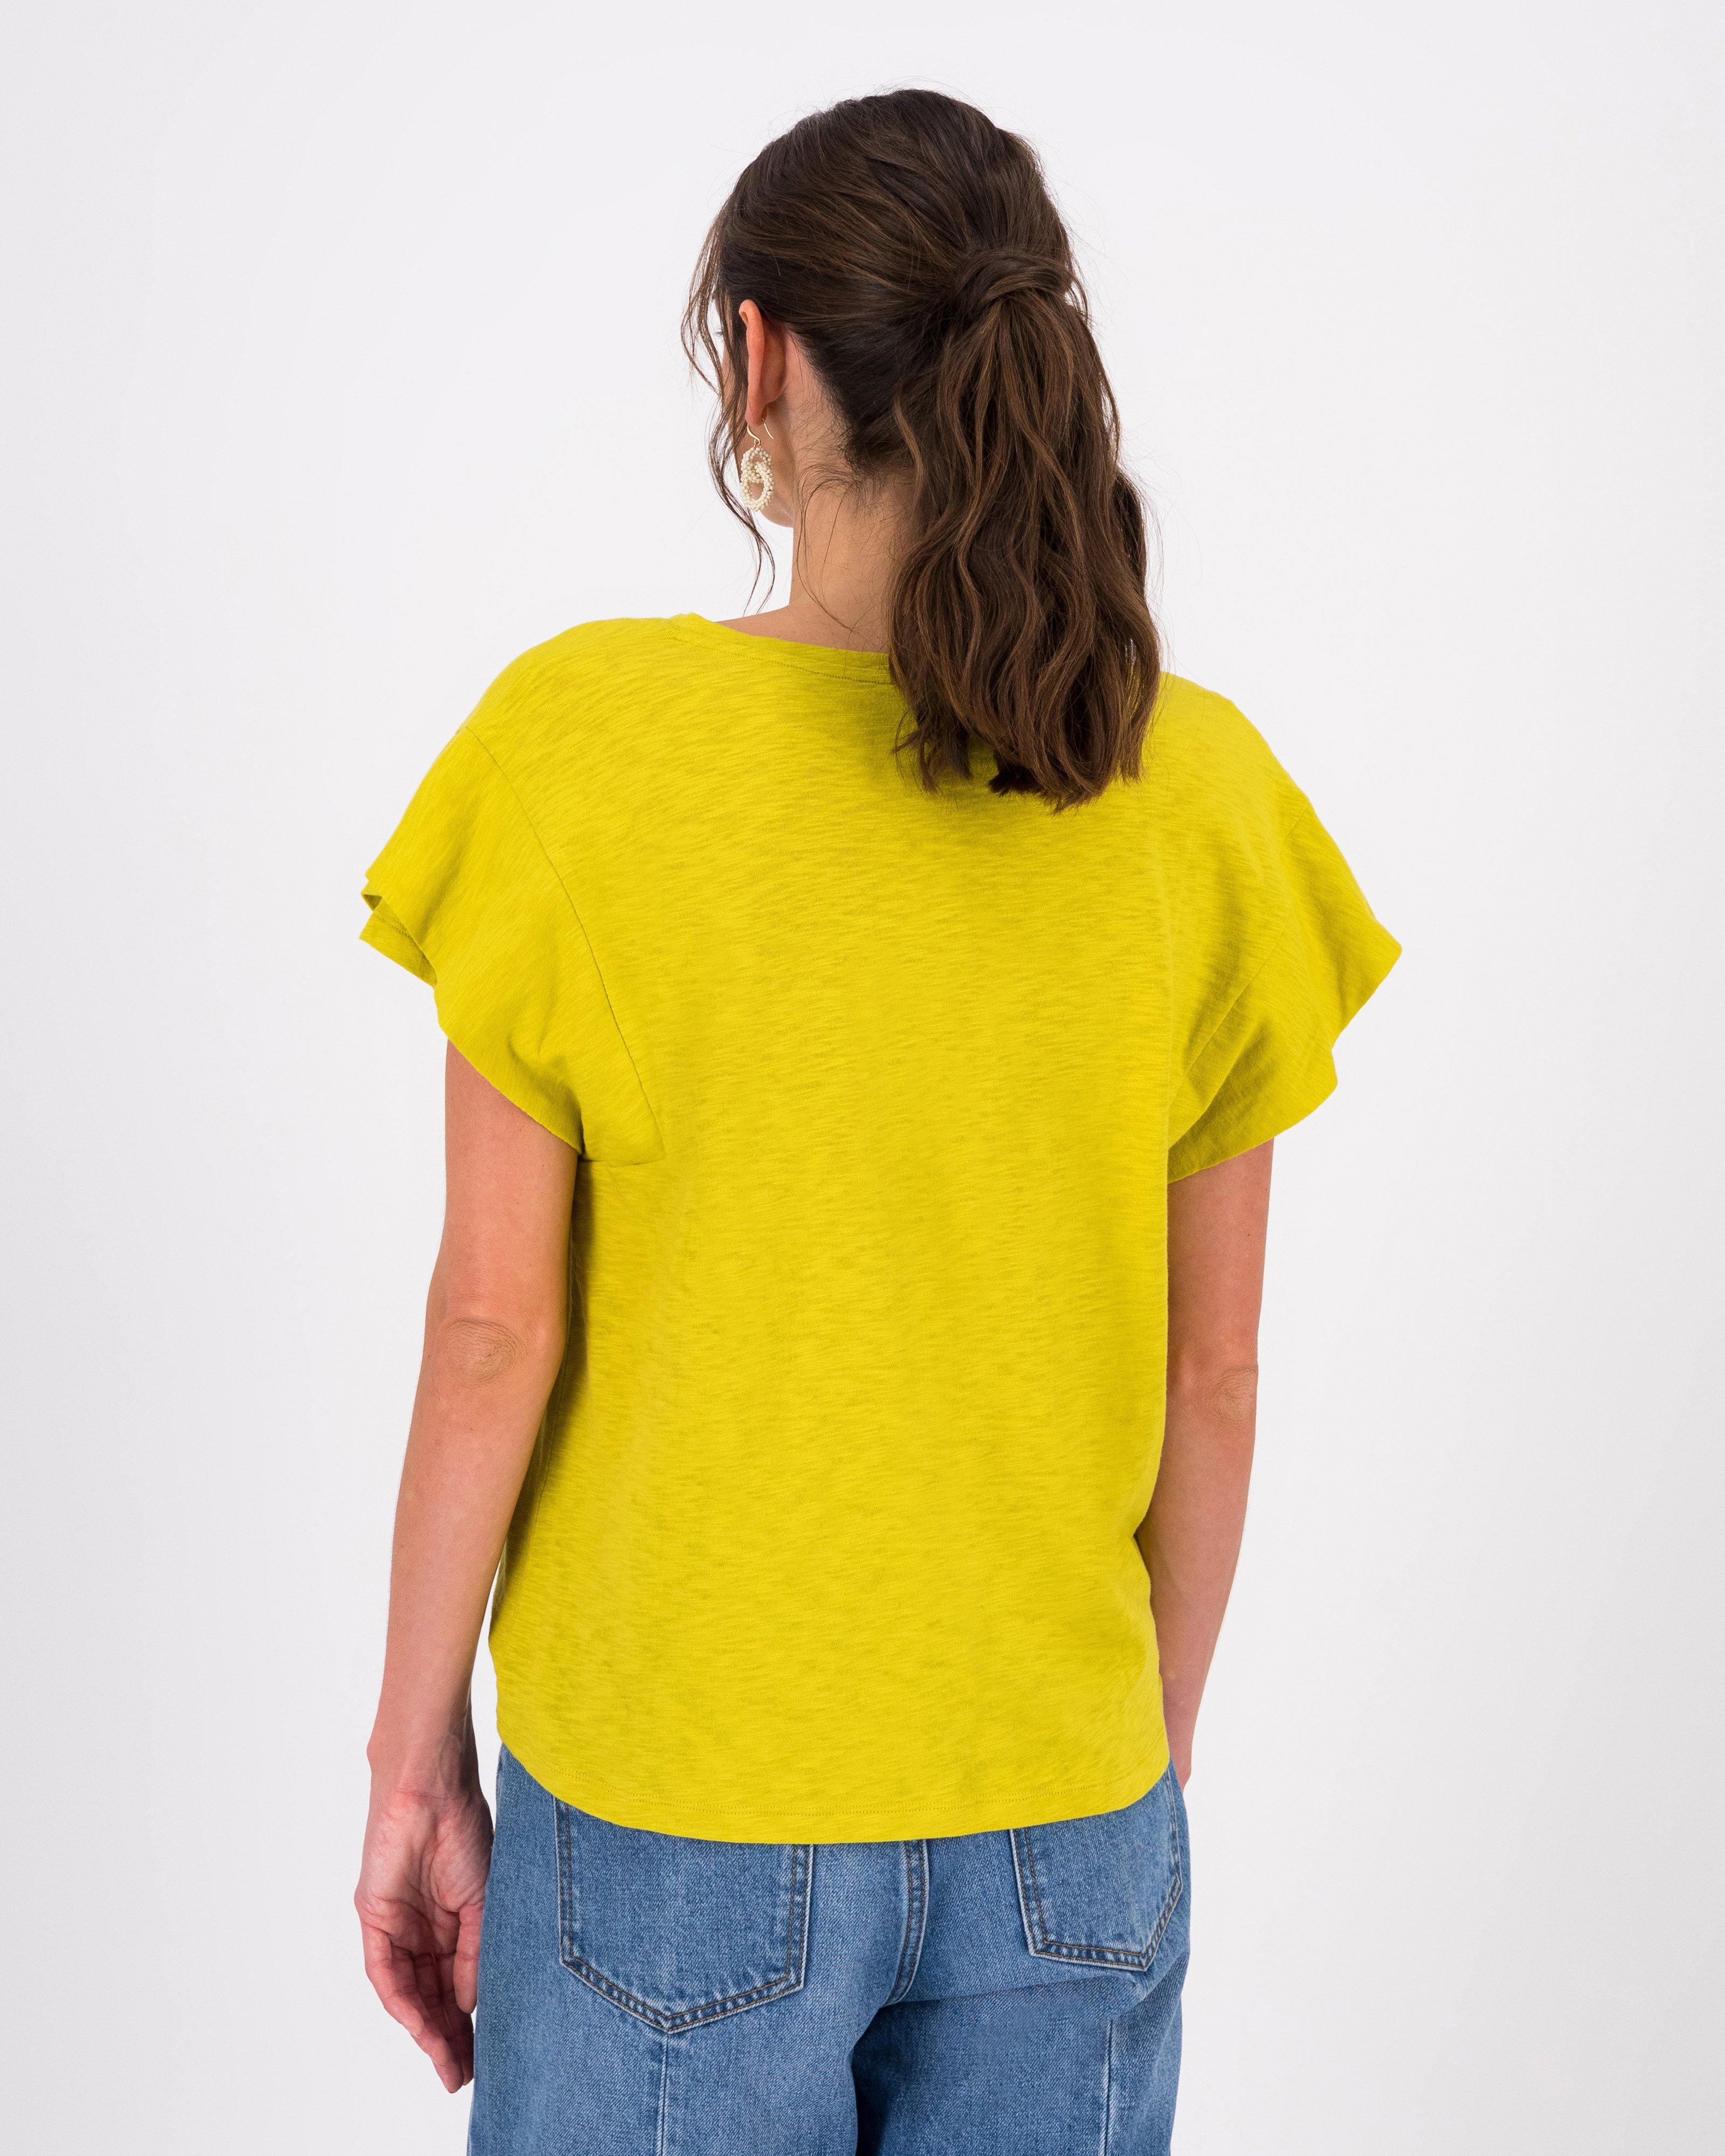 Ariel V-Neck T-Shirt -  Yellow